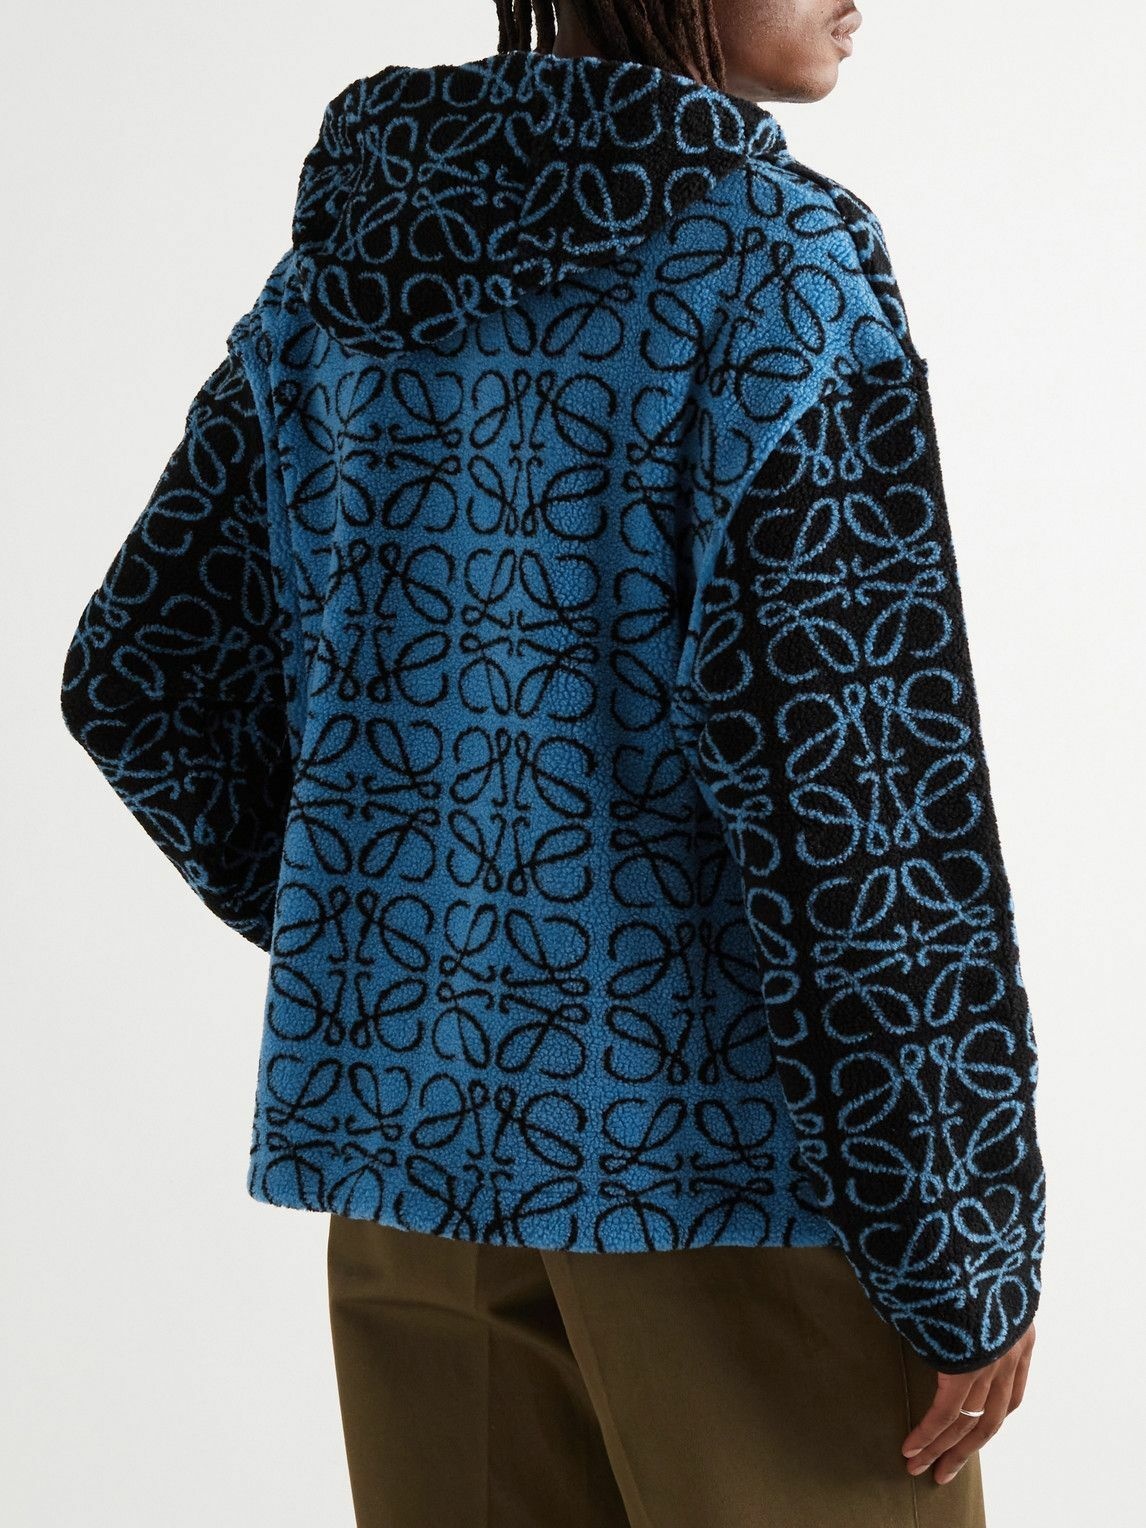 Loewe Men's Anagram Jacquard Fleece Jacket